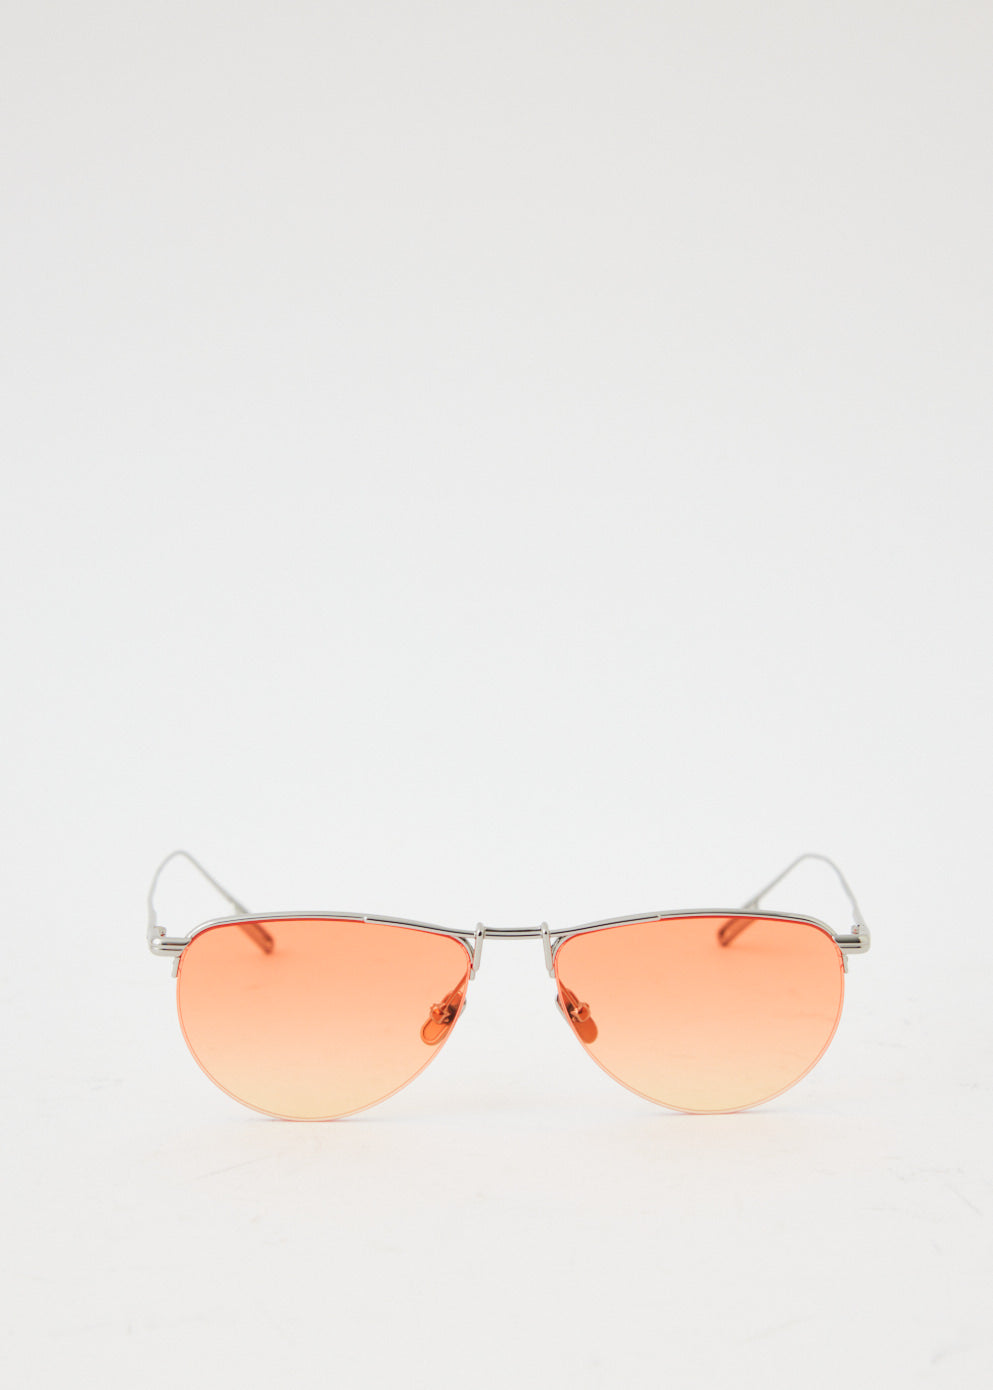 SWING-02(SG) Sunglasses